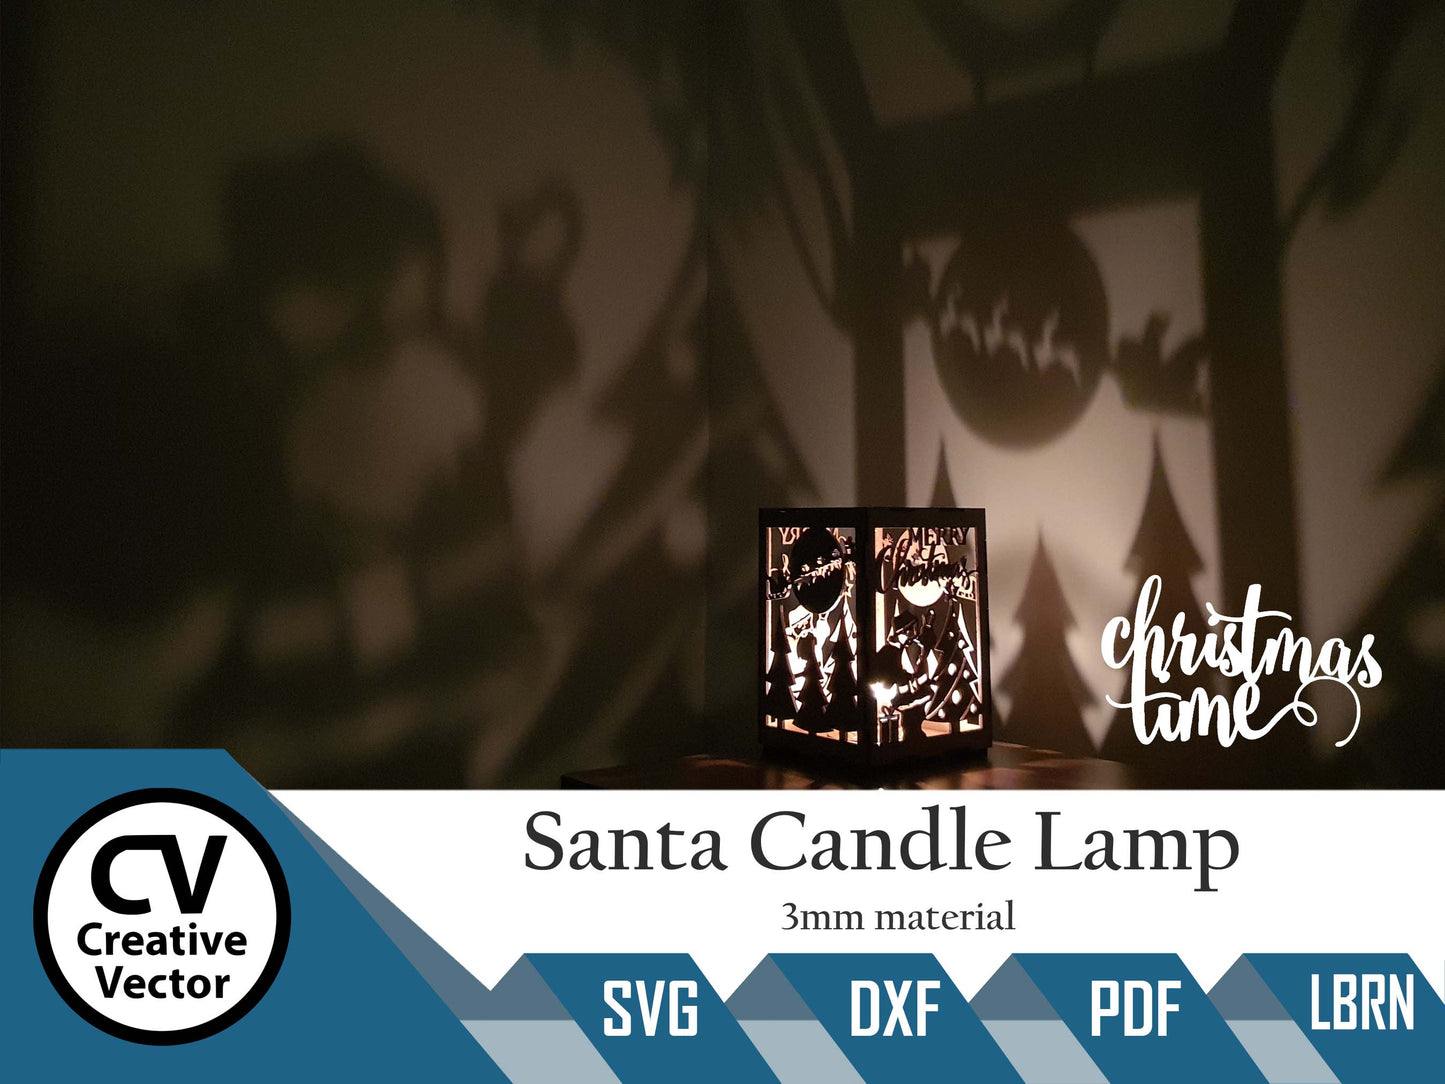 Santa Candle Lamp